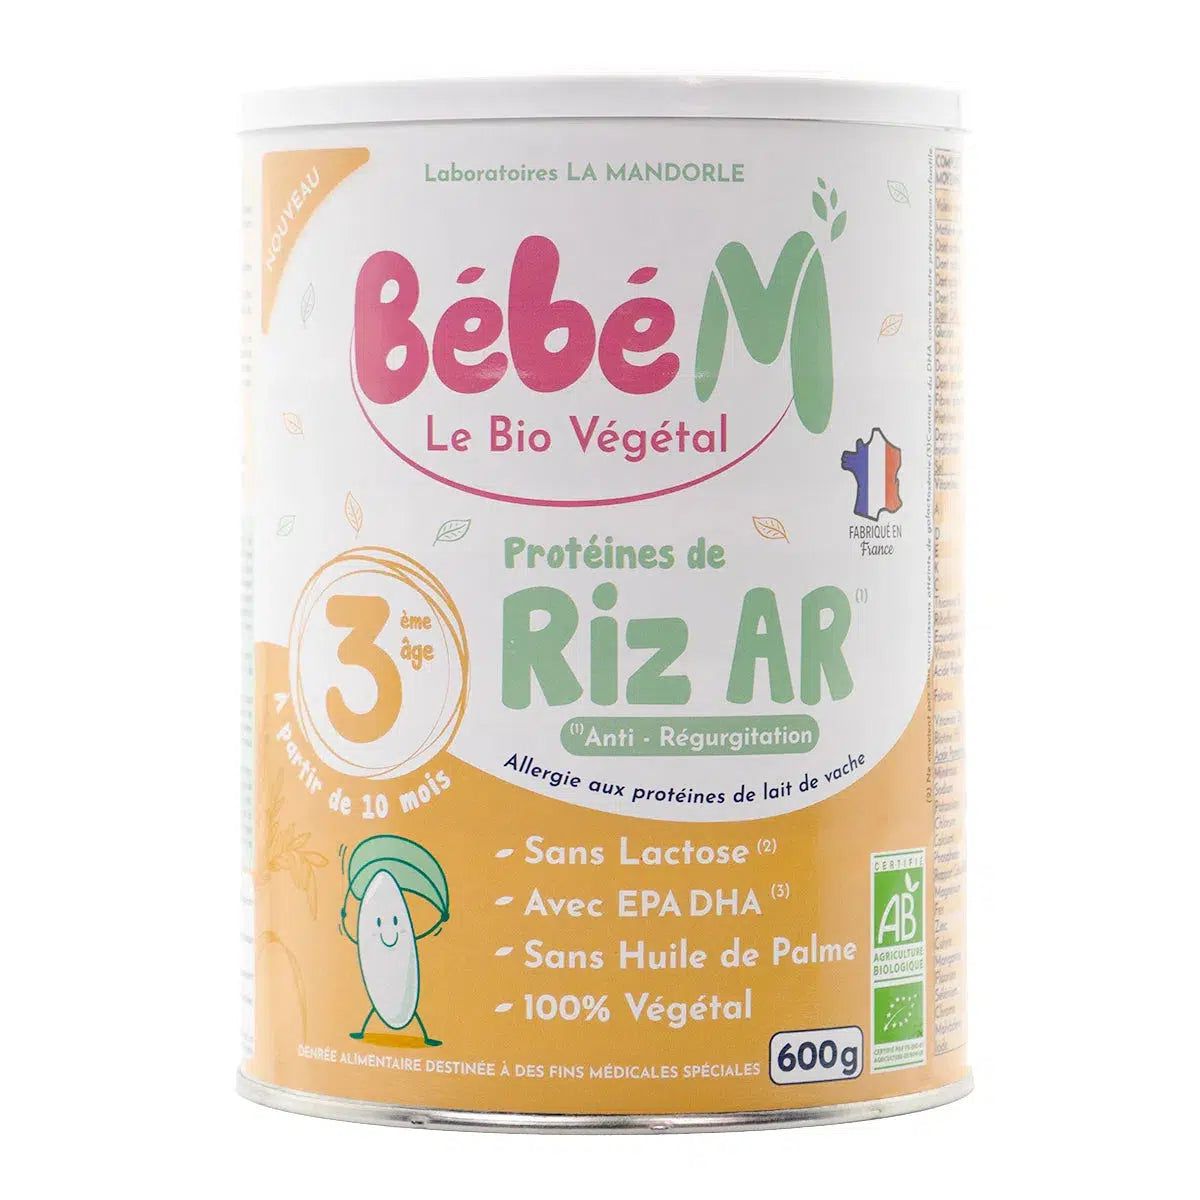 Bebe M (Bebe Mandorle) Organic Anti-Reflux Rice-Based Formula - Stage 3 (10+ months) - (600g)